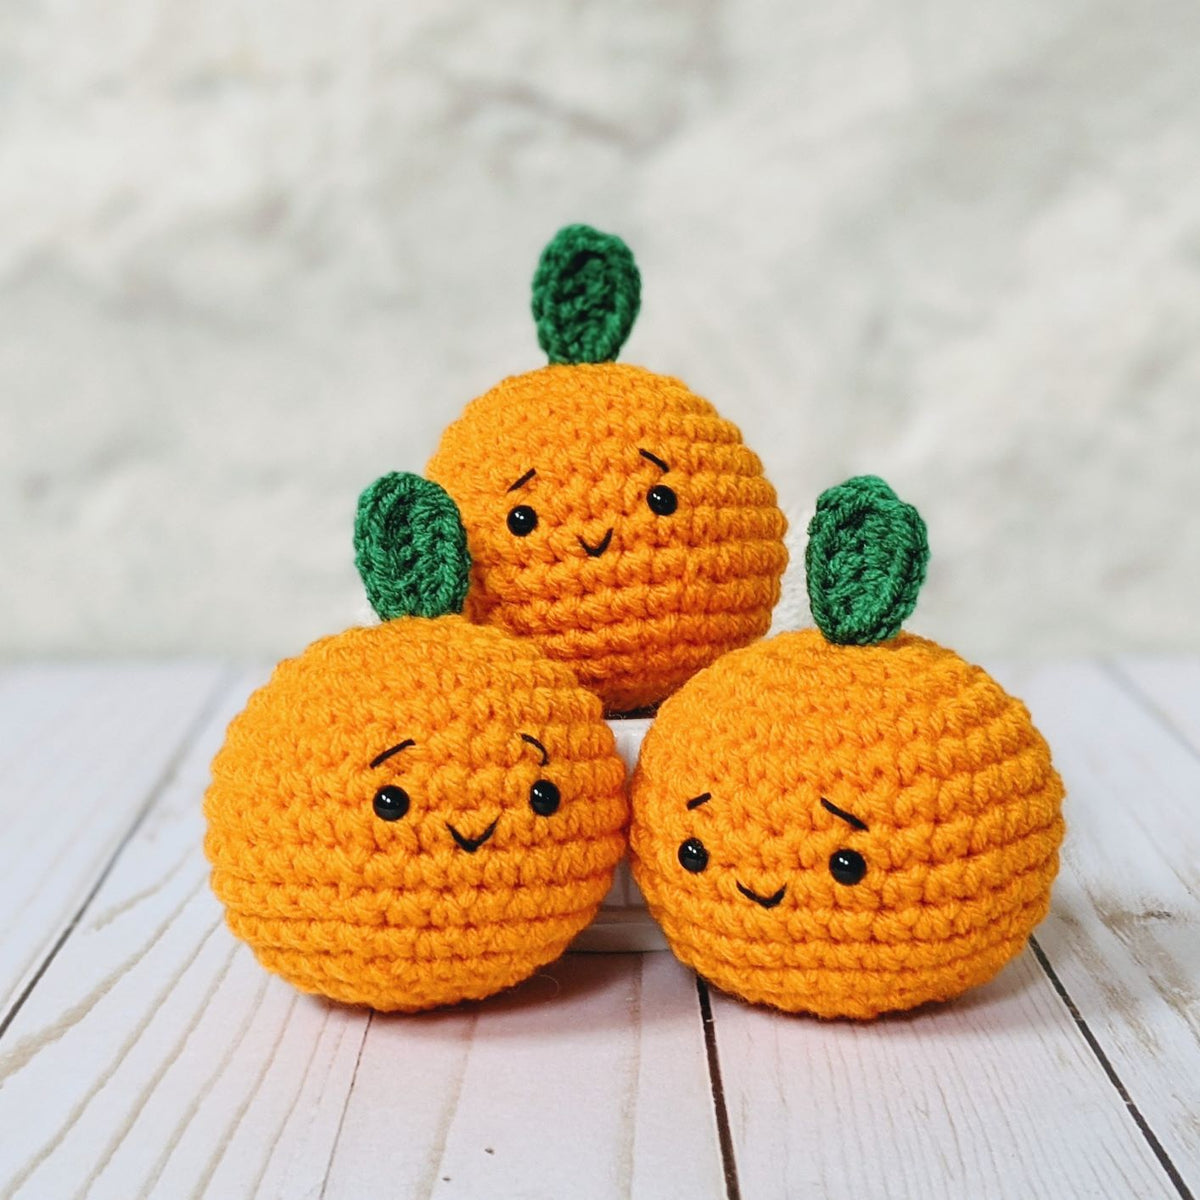 Crochet Patterns Using Orange Yarn